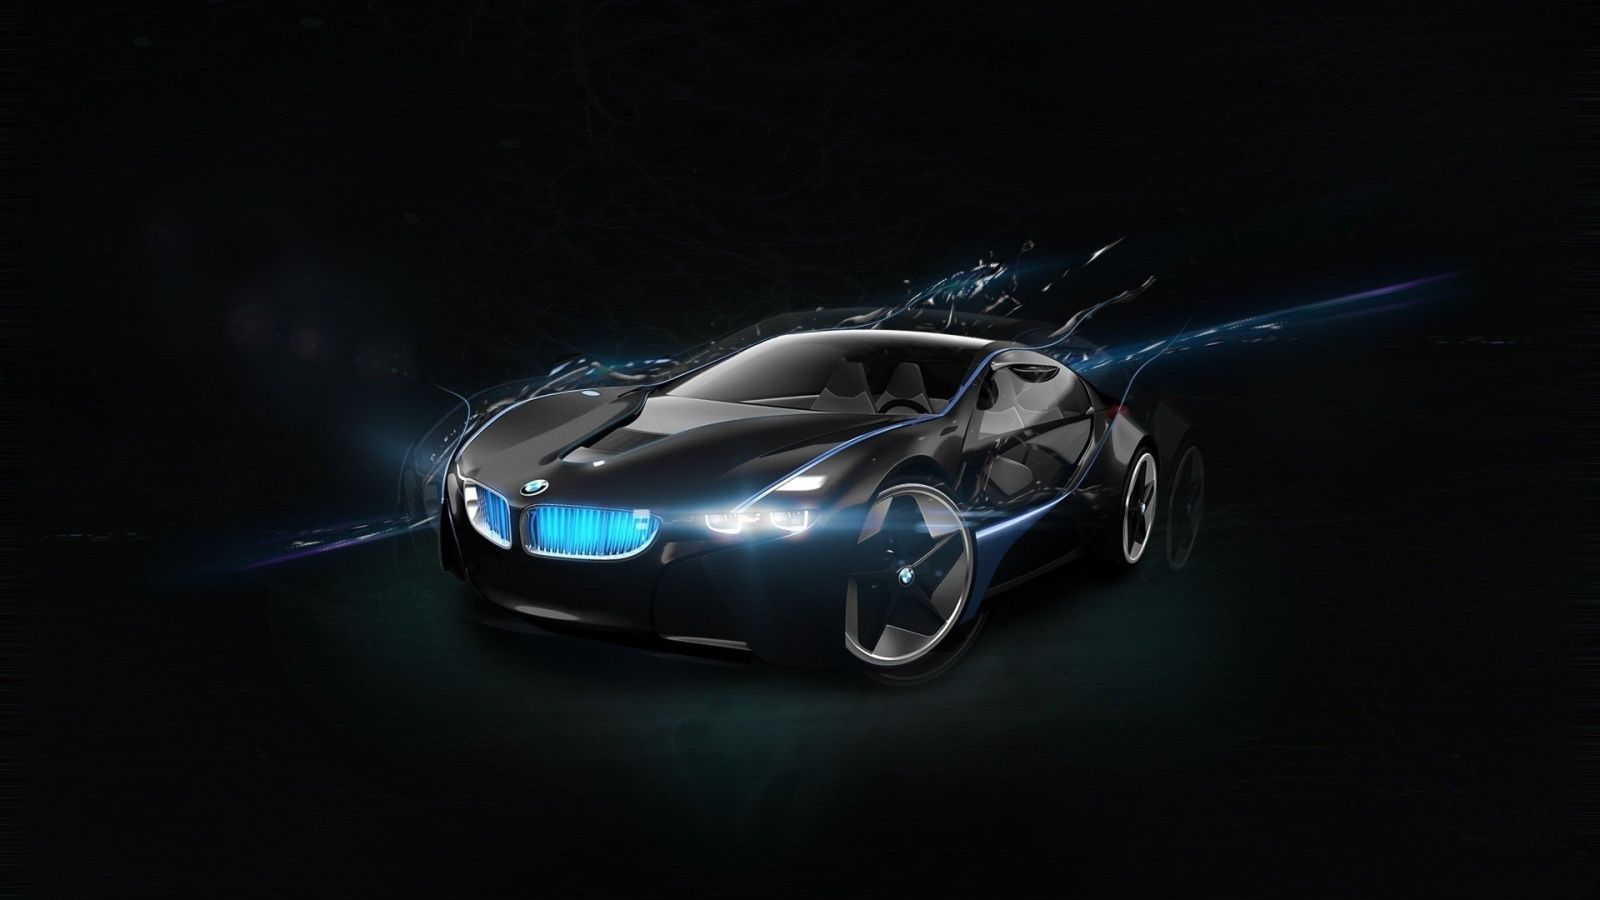 BMW Vision Super Car Wallpaper in jpg format for free download